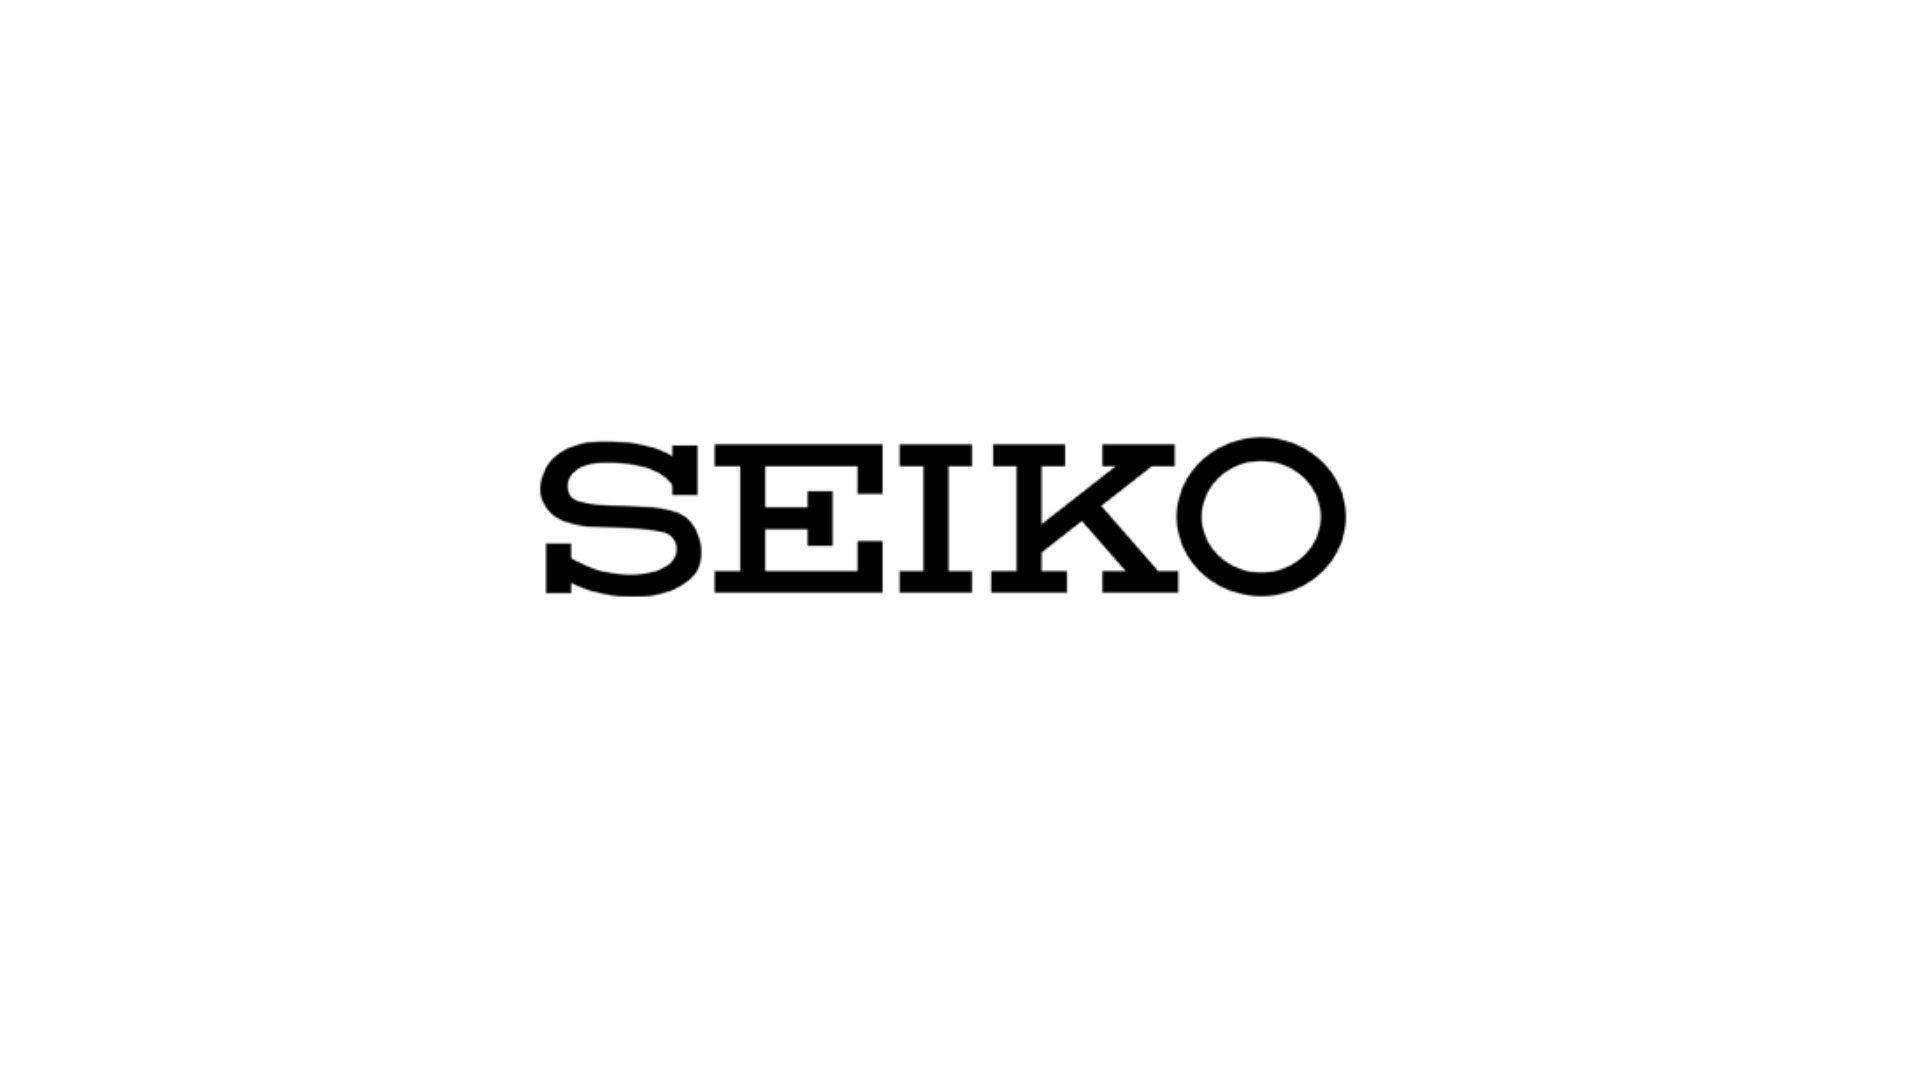 seiko logo done.jpg